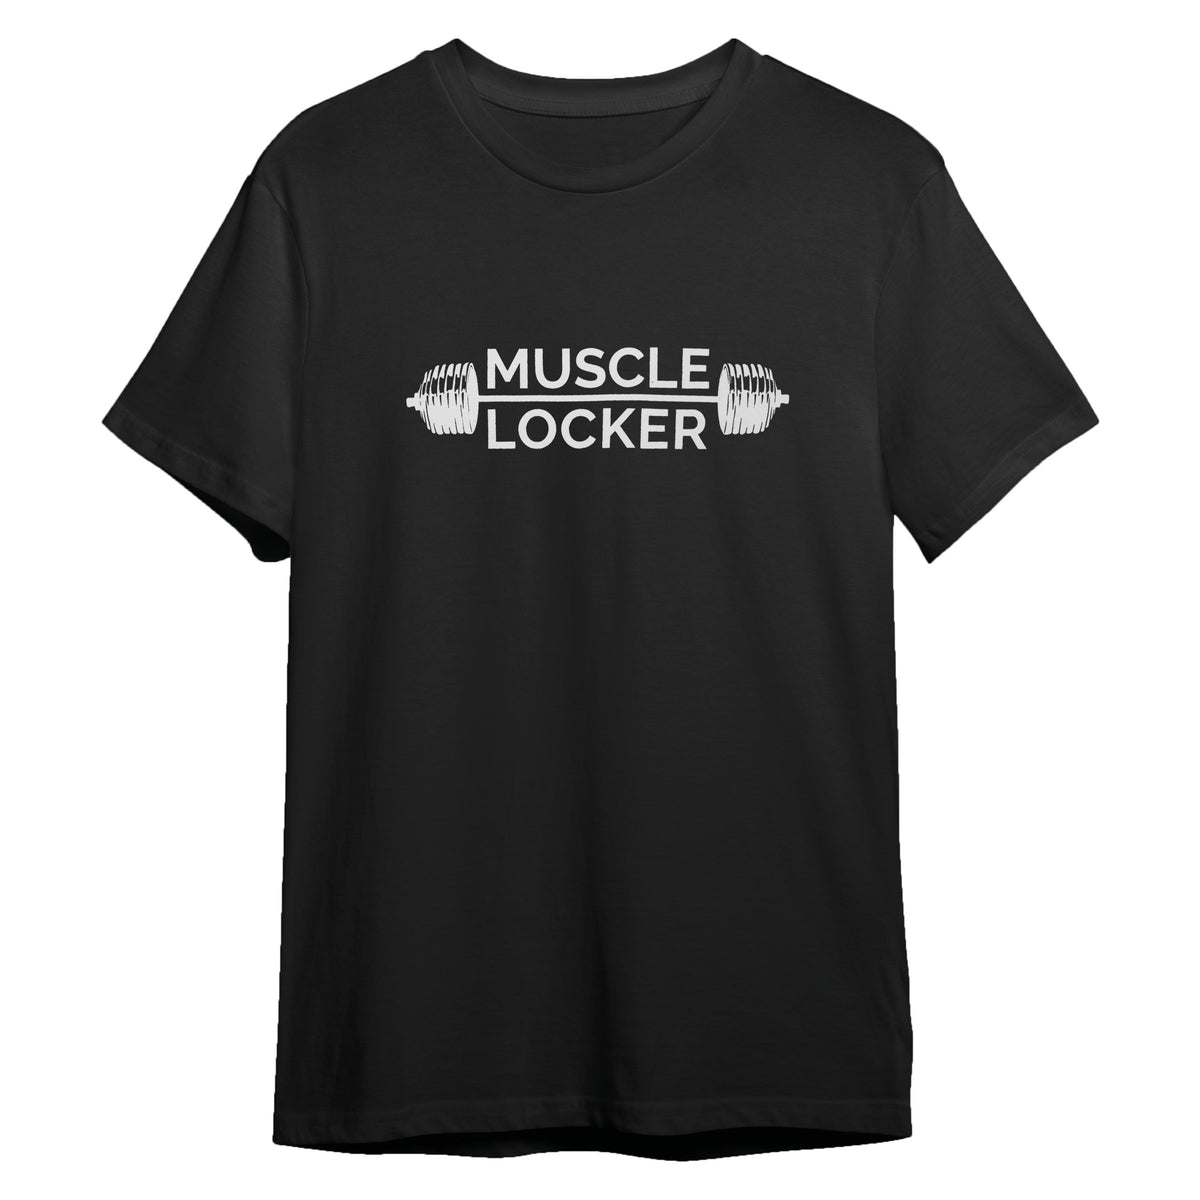 THE MUSCLE LOCKER T-SHIRT